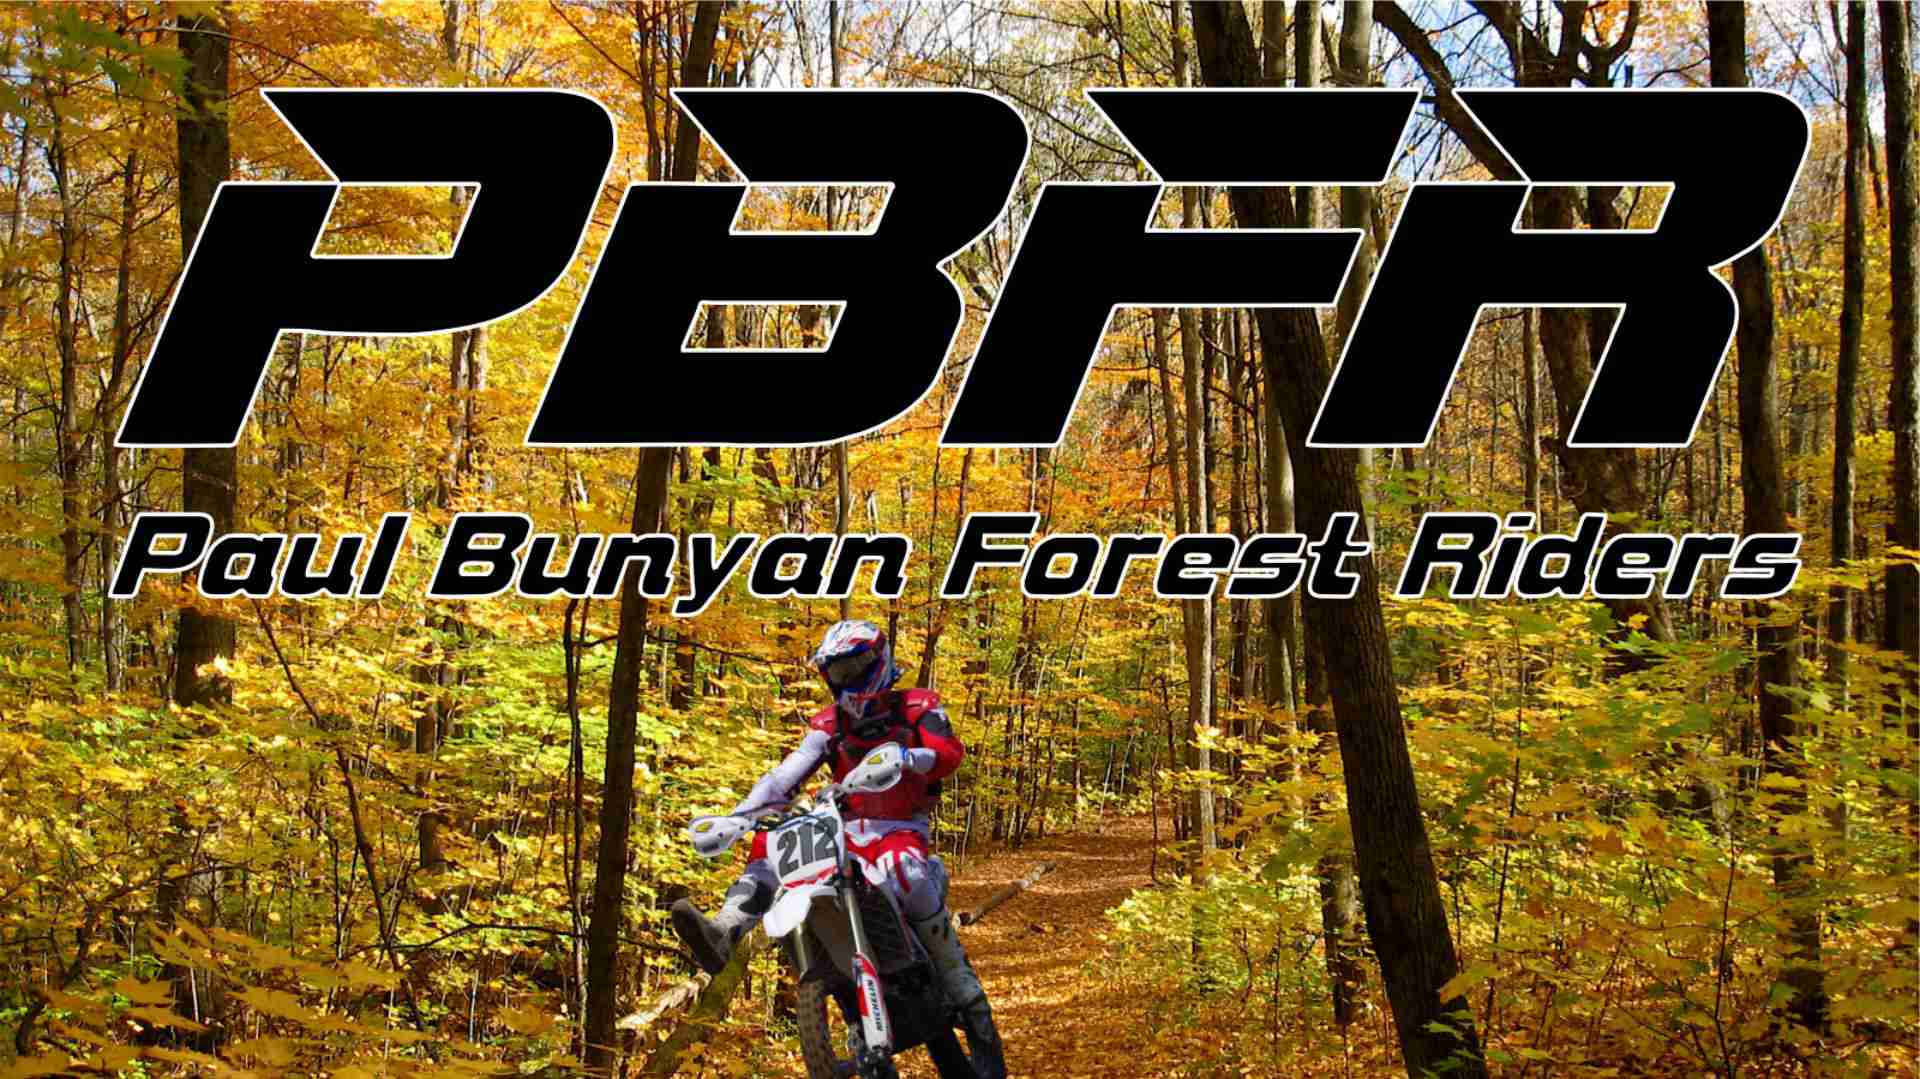 Paul Bunyan Forest Riders